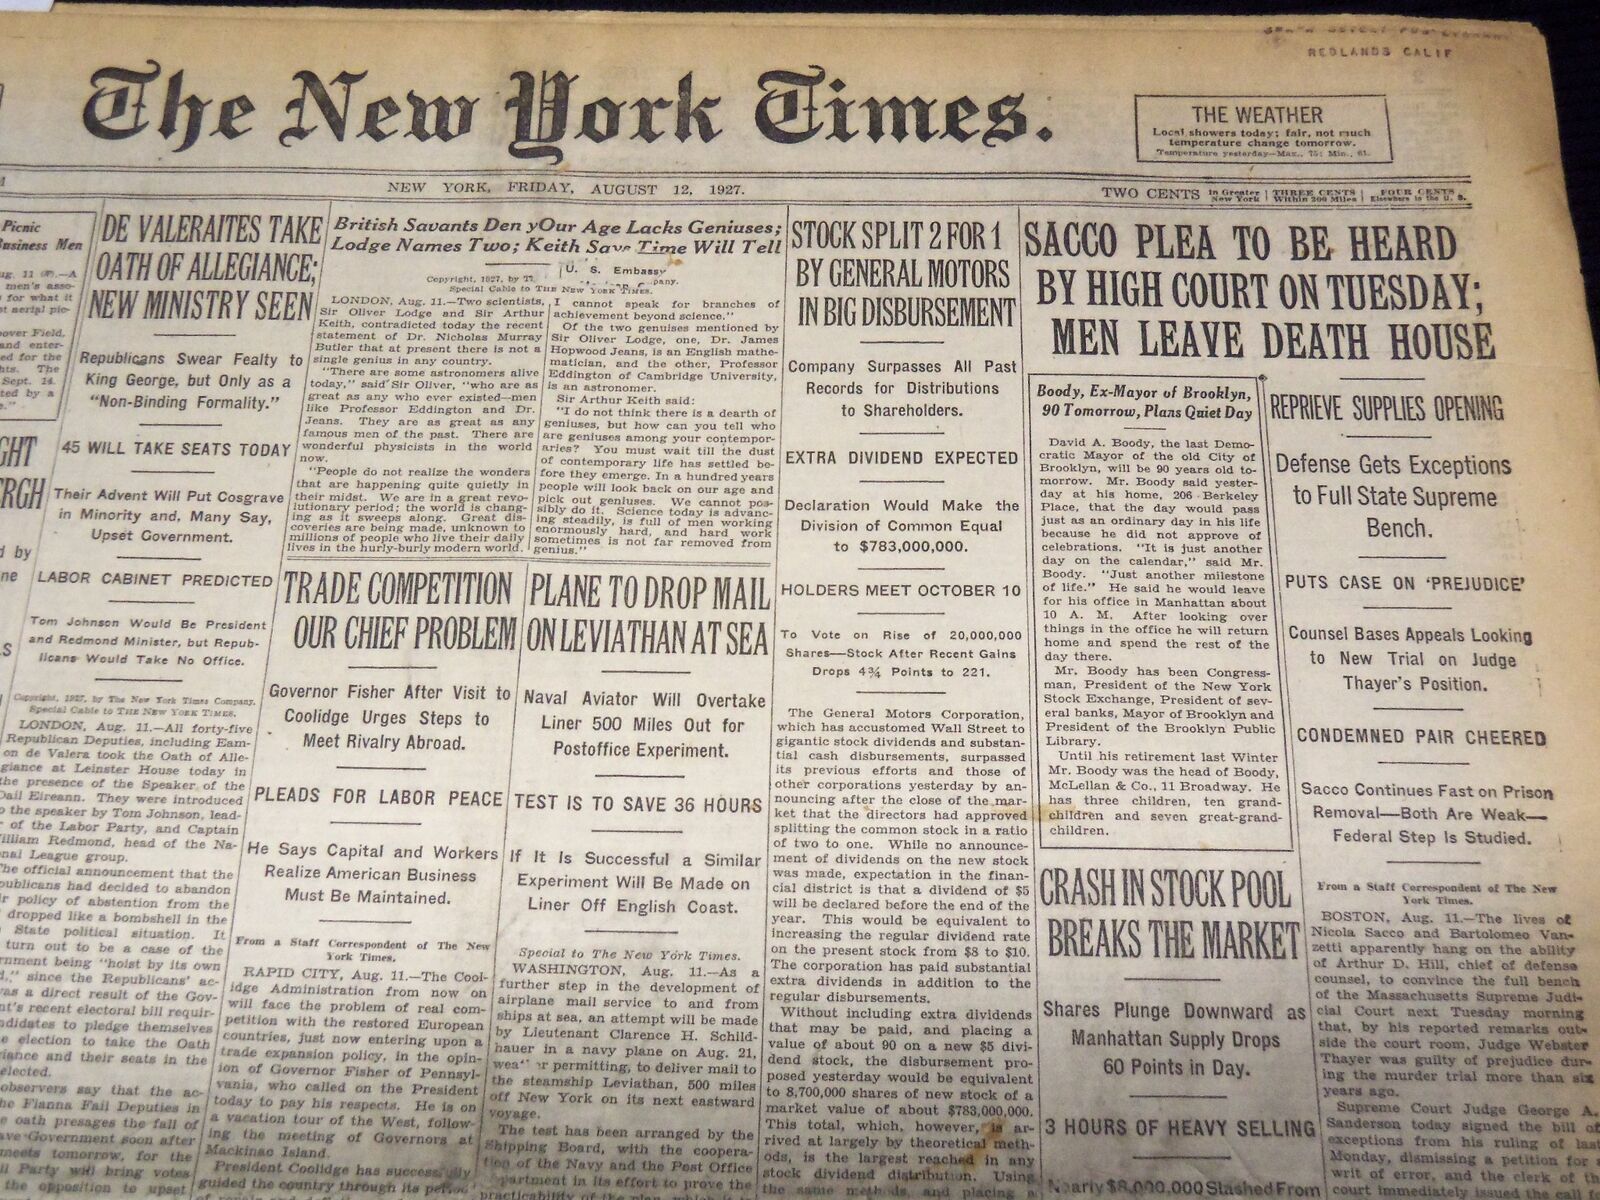 1927 AUGUST 12 NEW YORK TIMES NEWSPAPER - SACCO PLEA TO BE HEARD - NT 9558